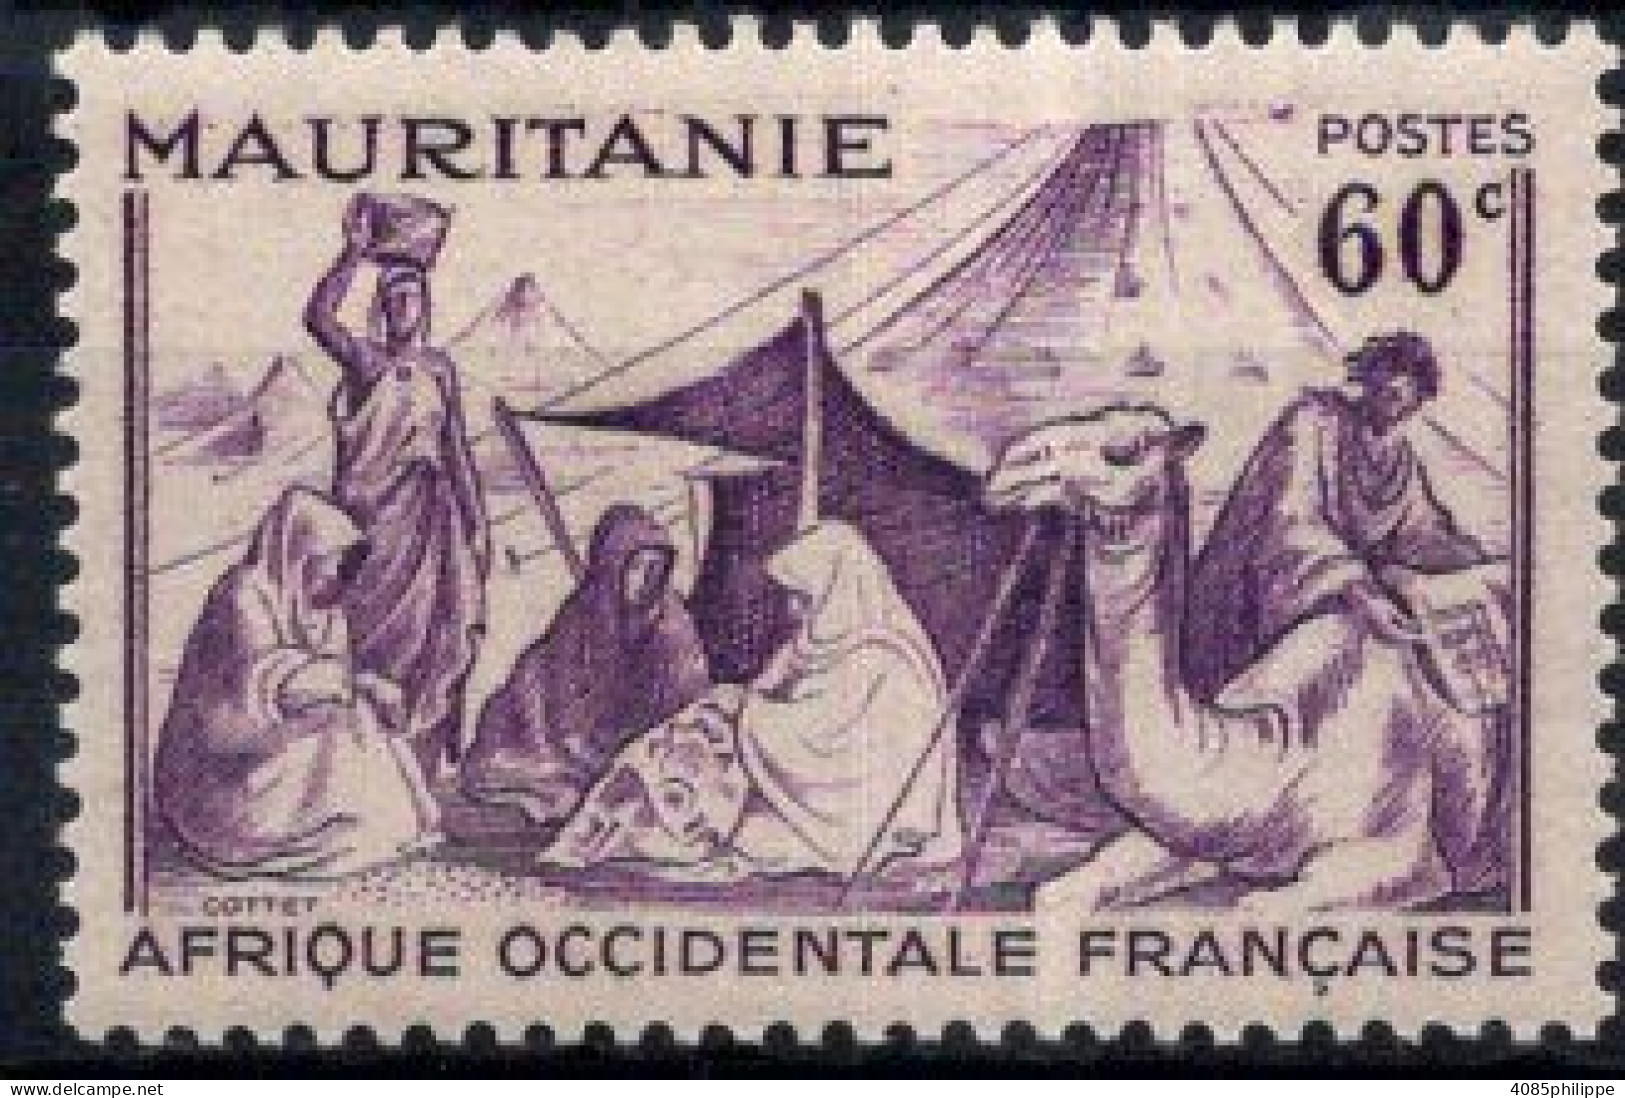 Mauritanie Timbre-poste N°129** Neuf Sans Charnière TB Cote : 3€00 - Nuevos